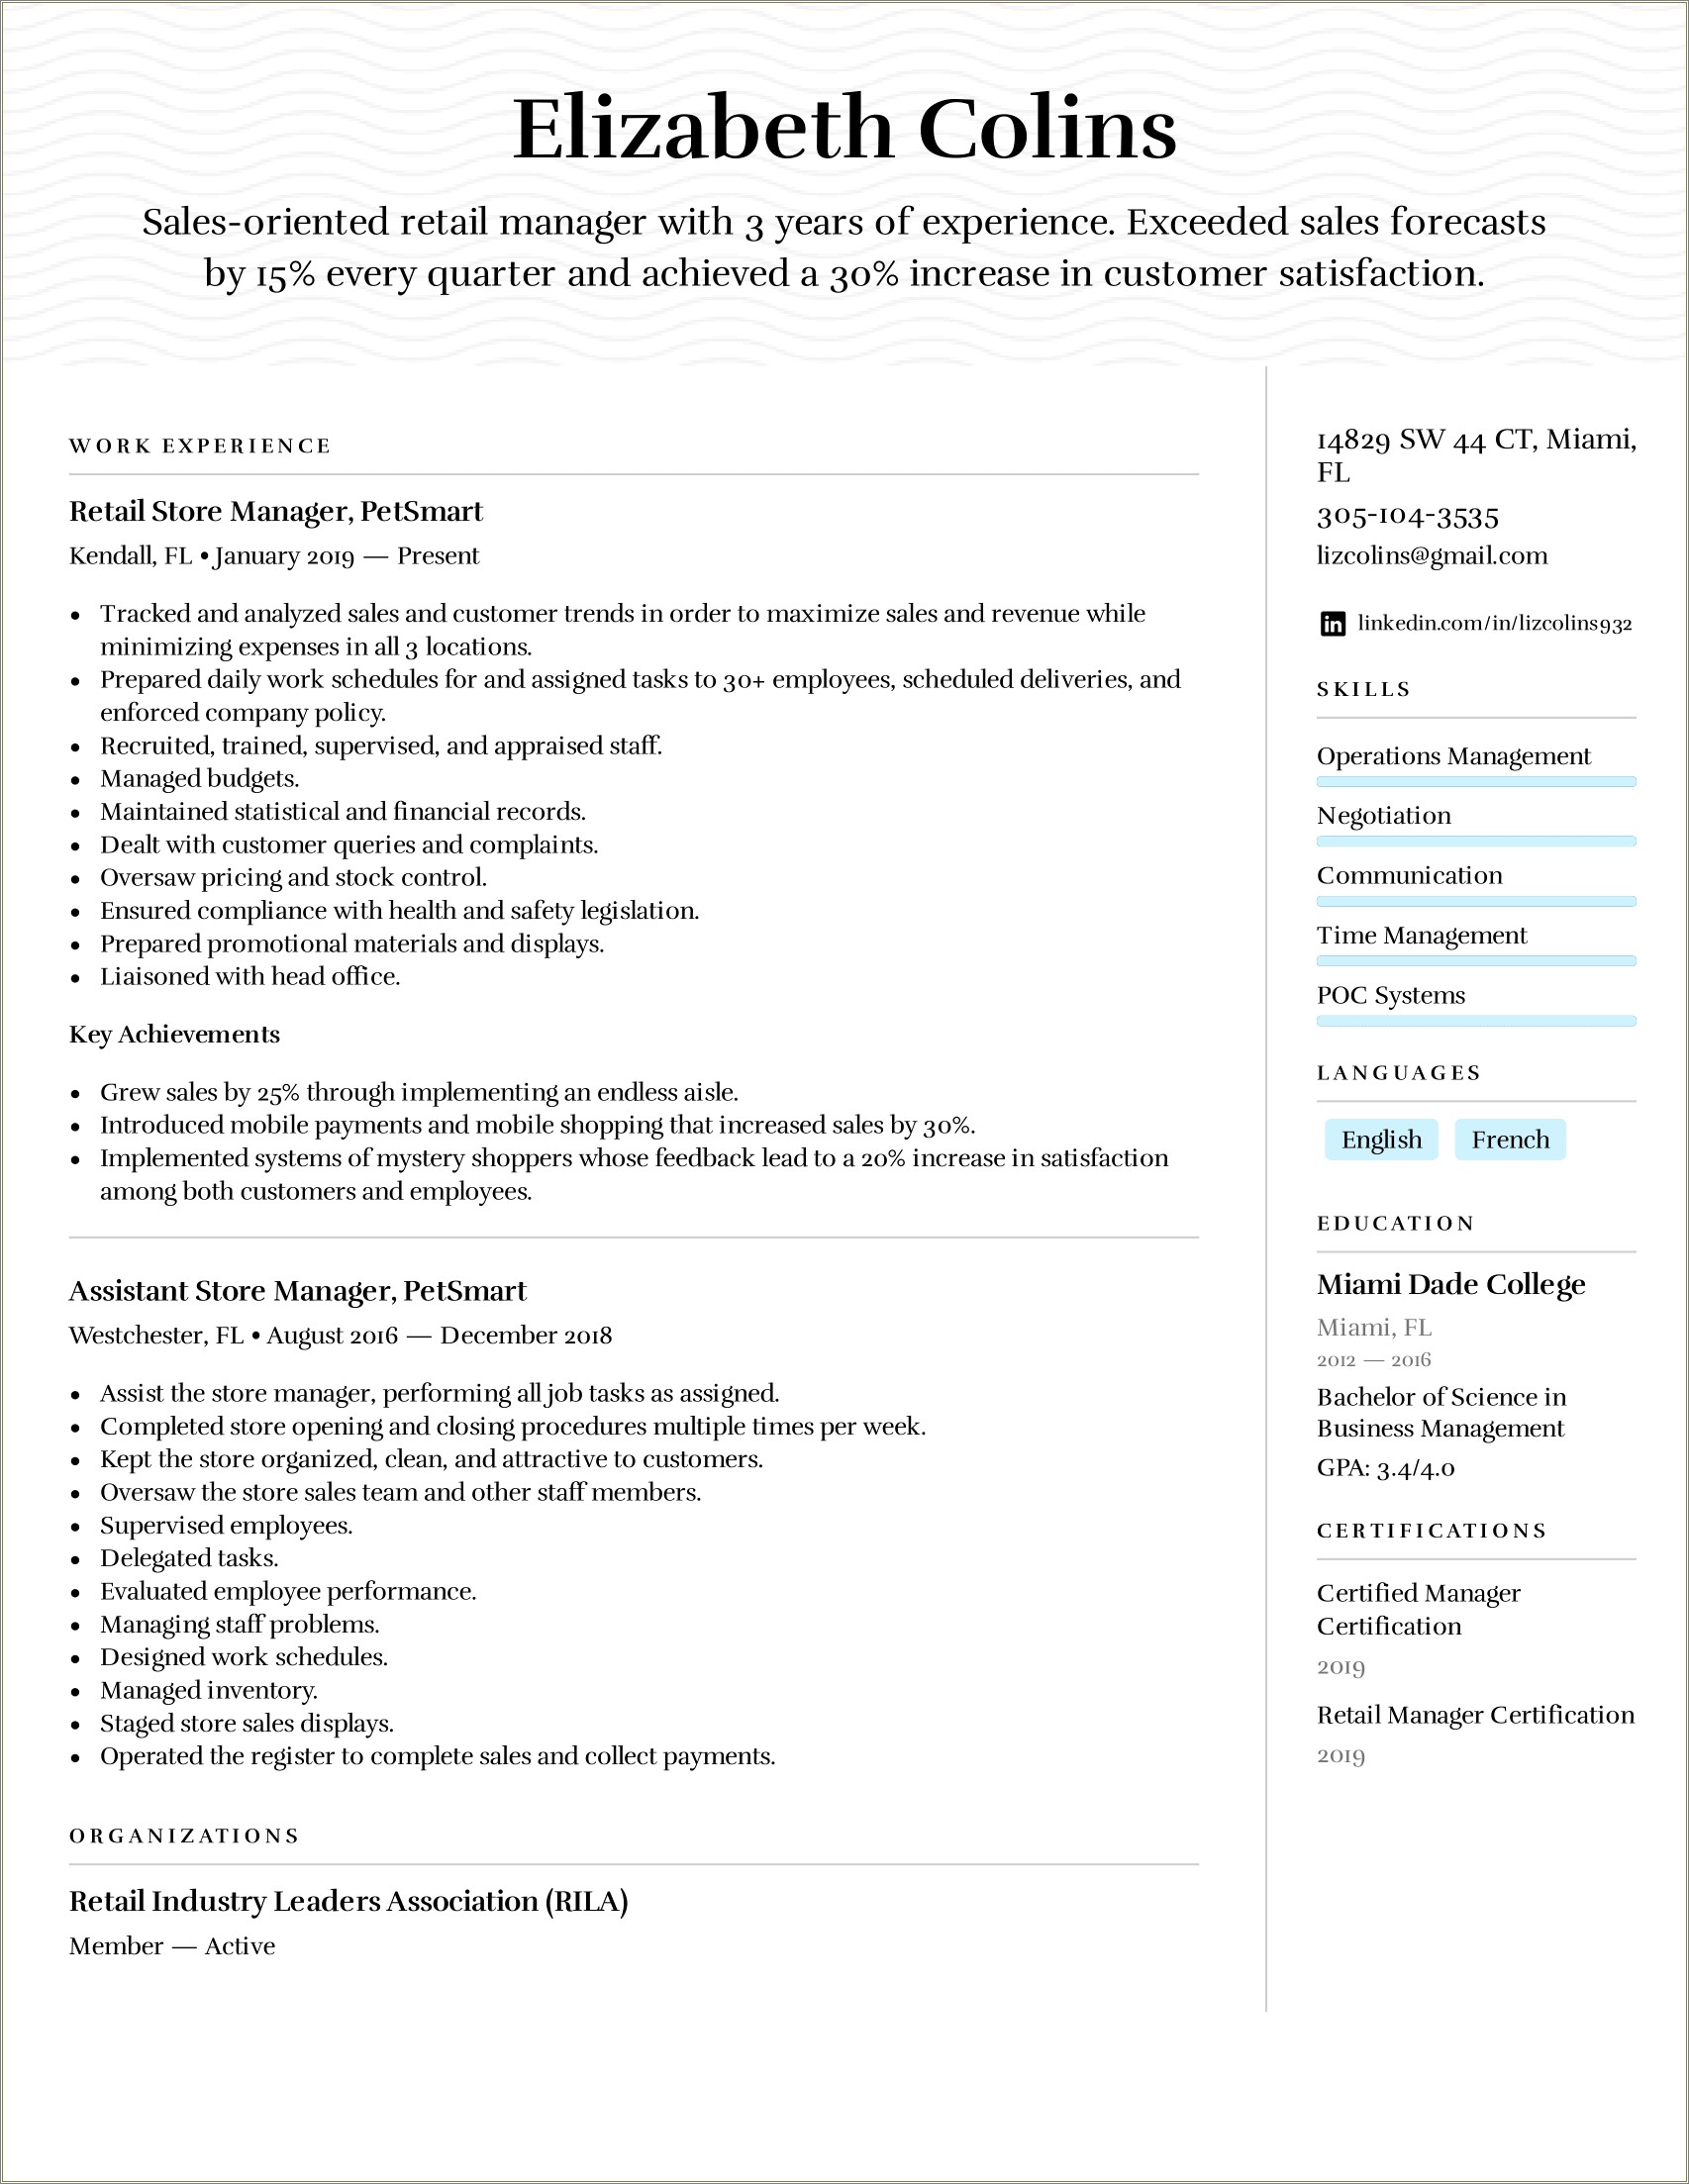 Retail Assistant Manager Description For Resume